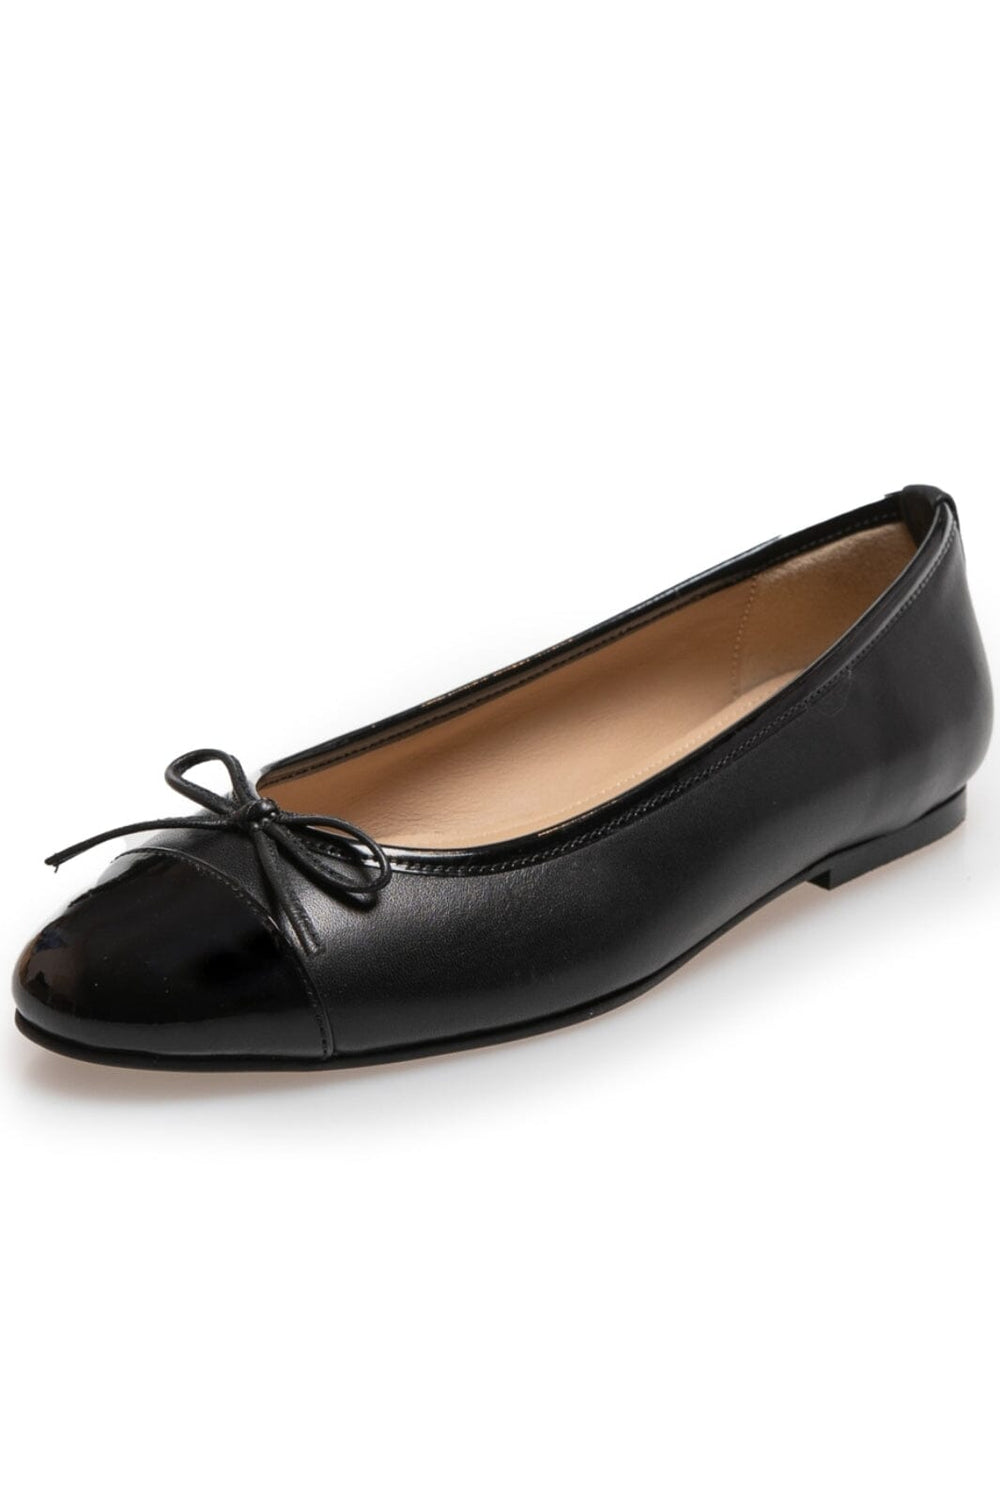 Copenhagen Shoes - Like Moving Patent Toe - 038 Black Patent Ballerinaer 